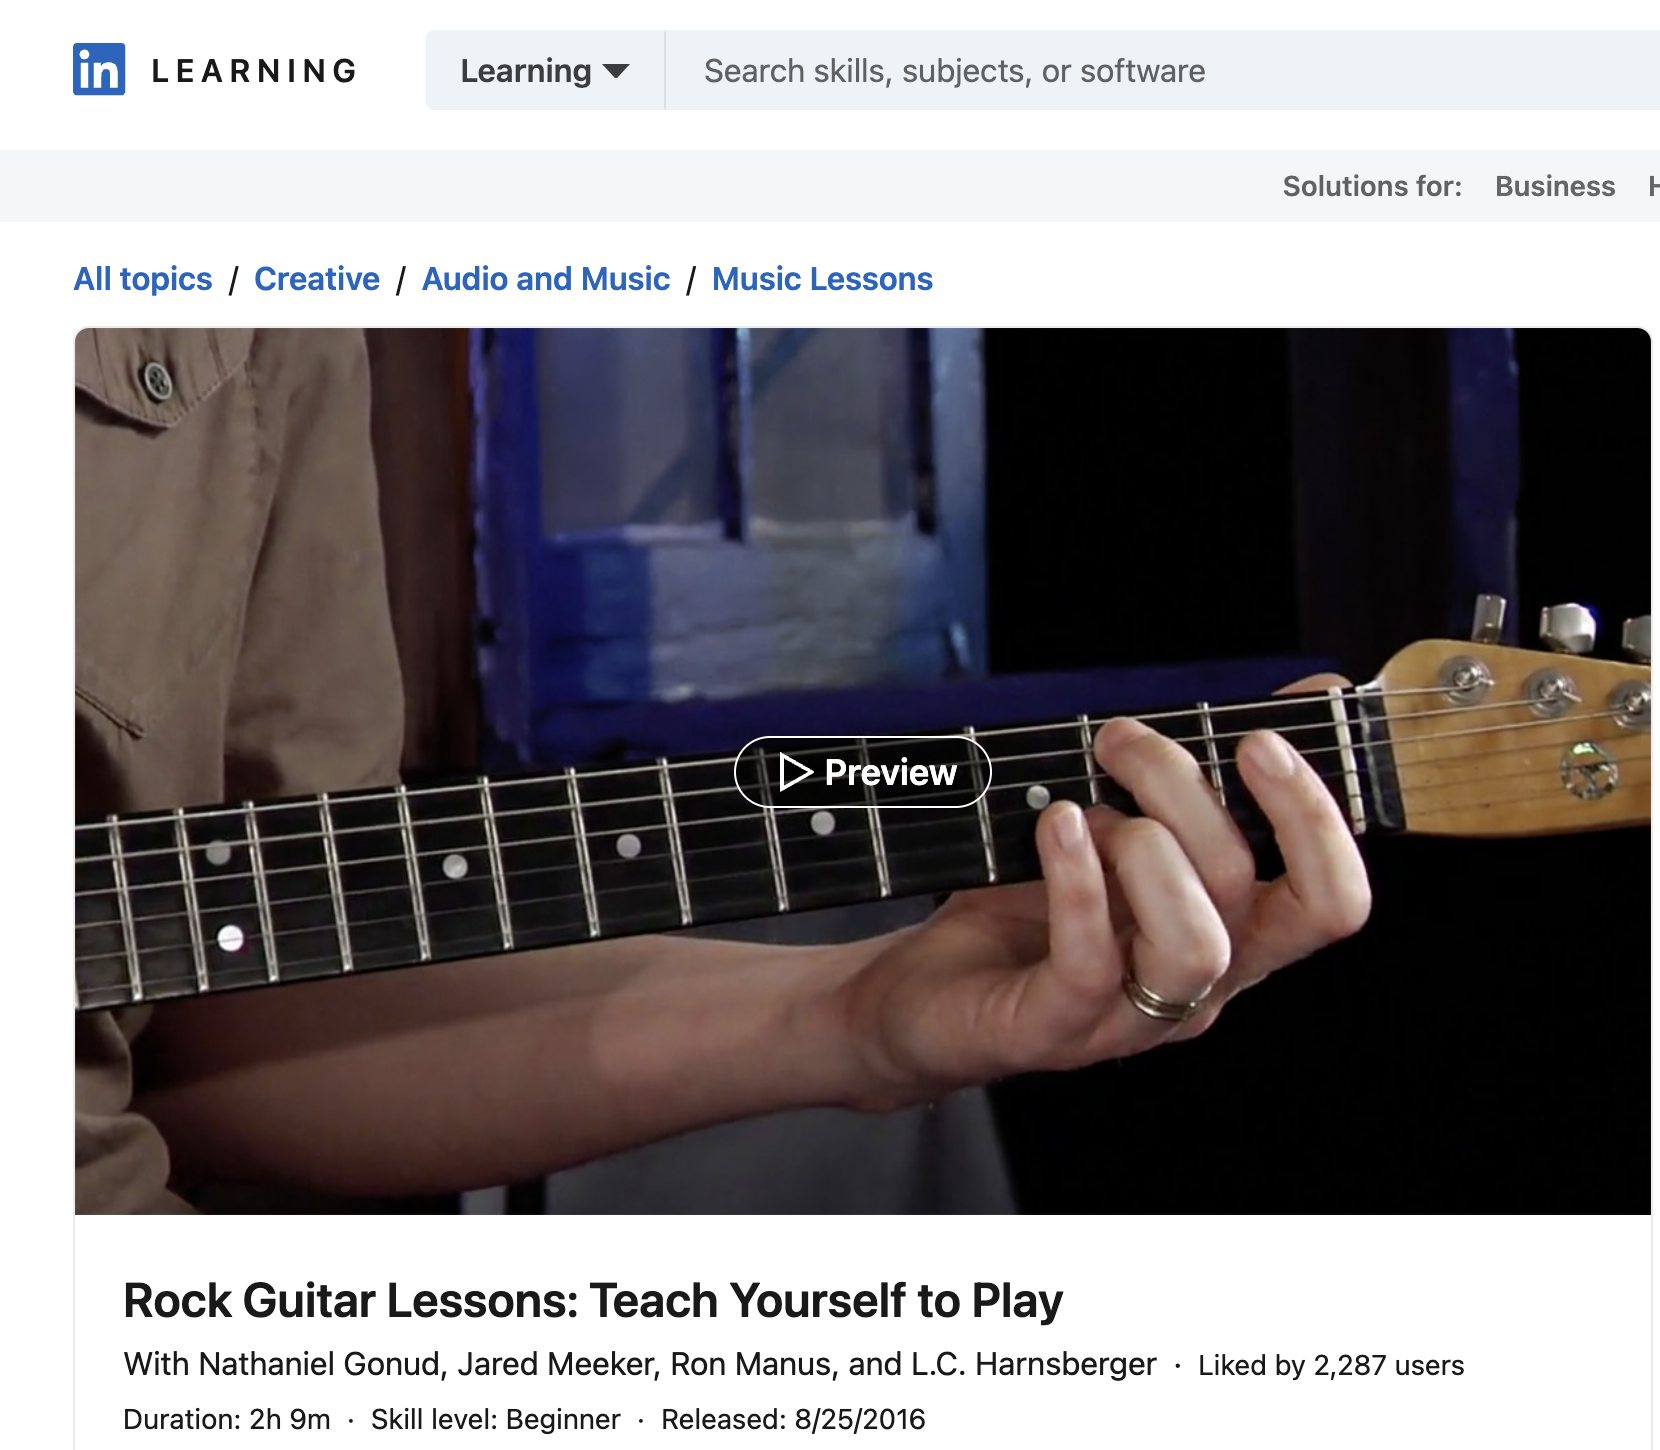 Rock Guitar Lessons